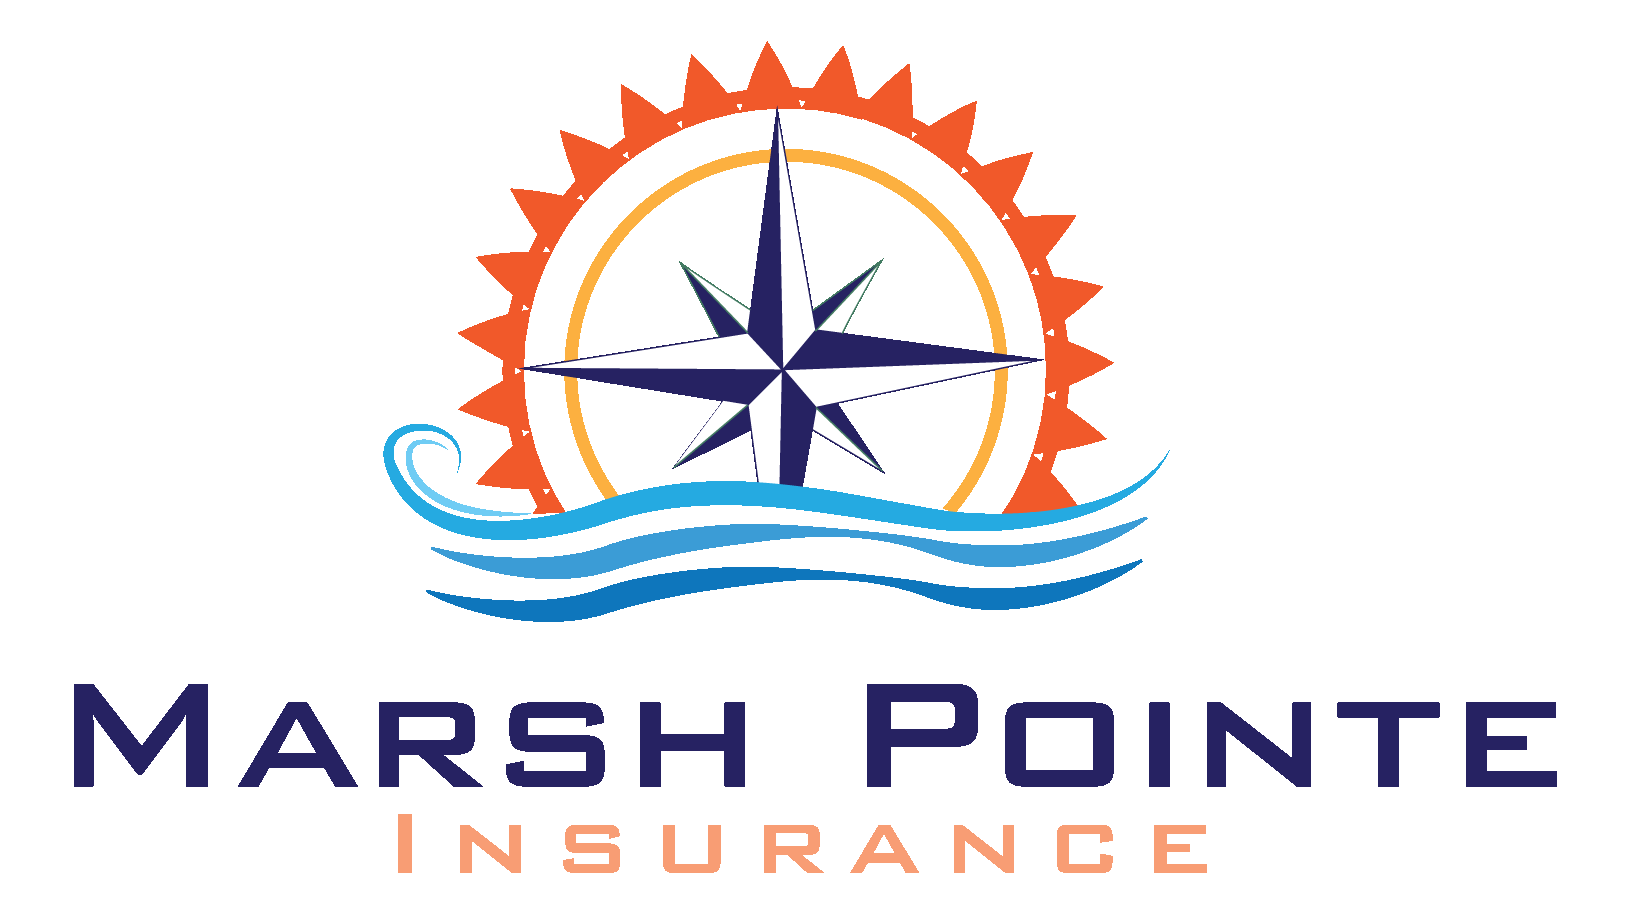 Visit https://marsh-pointe.com/